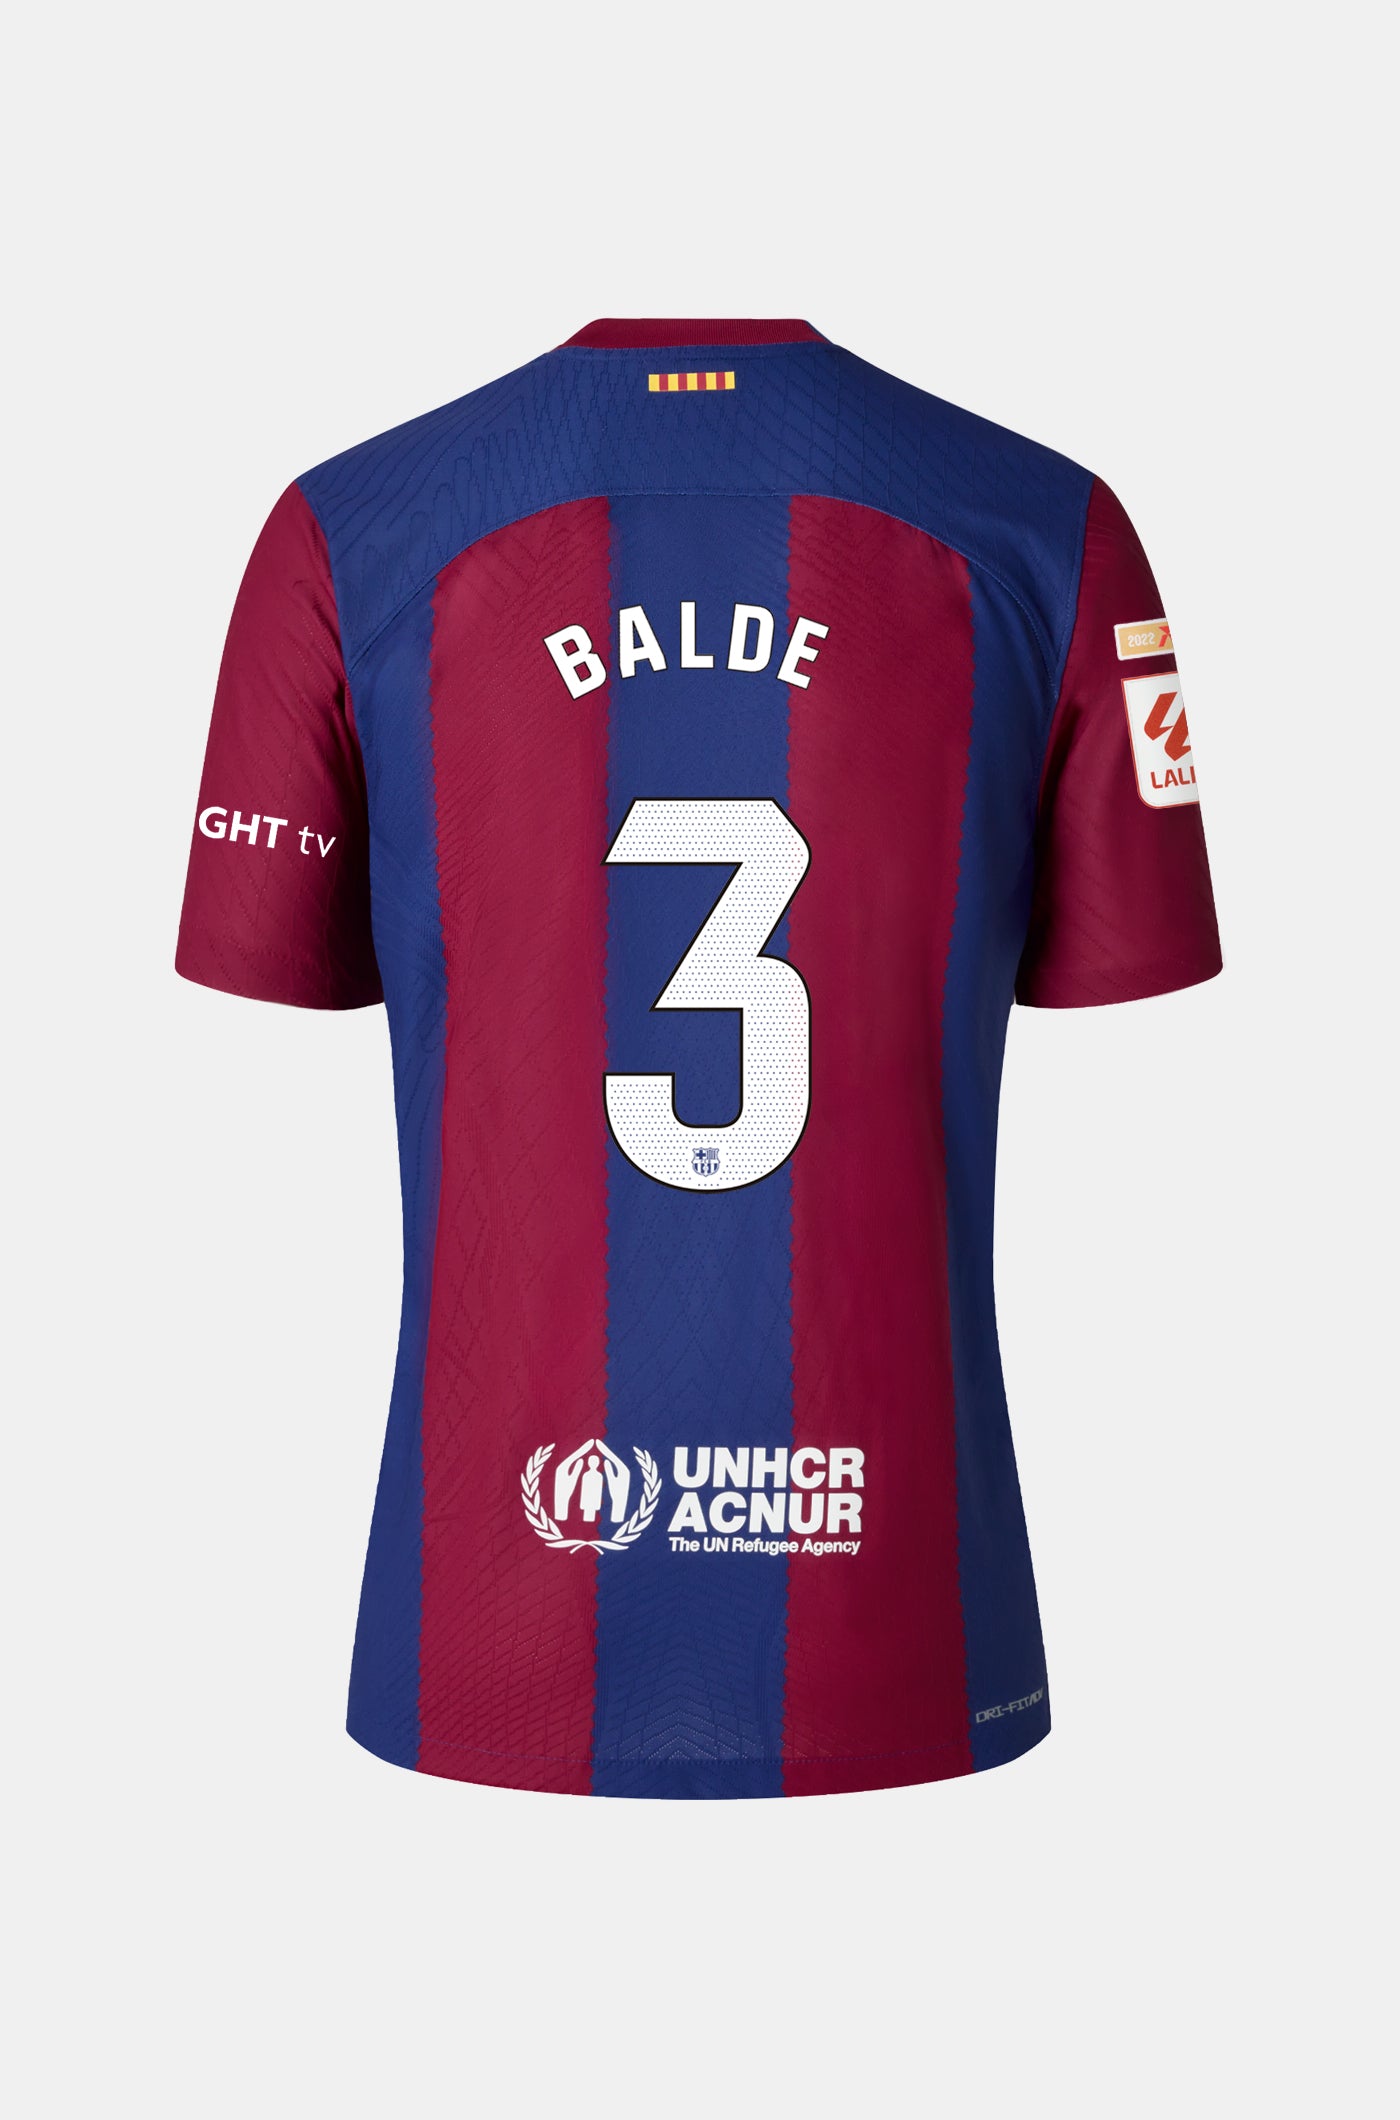 LFP FC Barcelona Home Shirt 23/24 Player's Edition - Women - BALDE